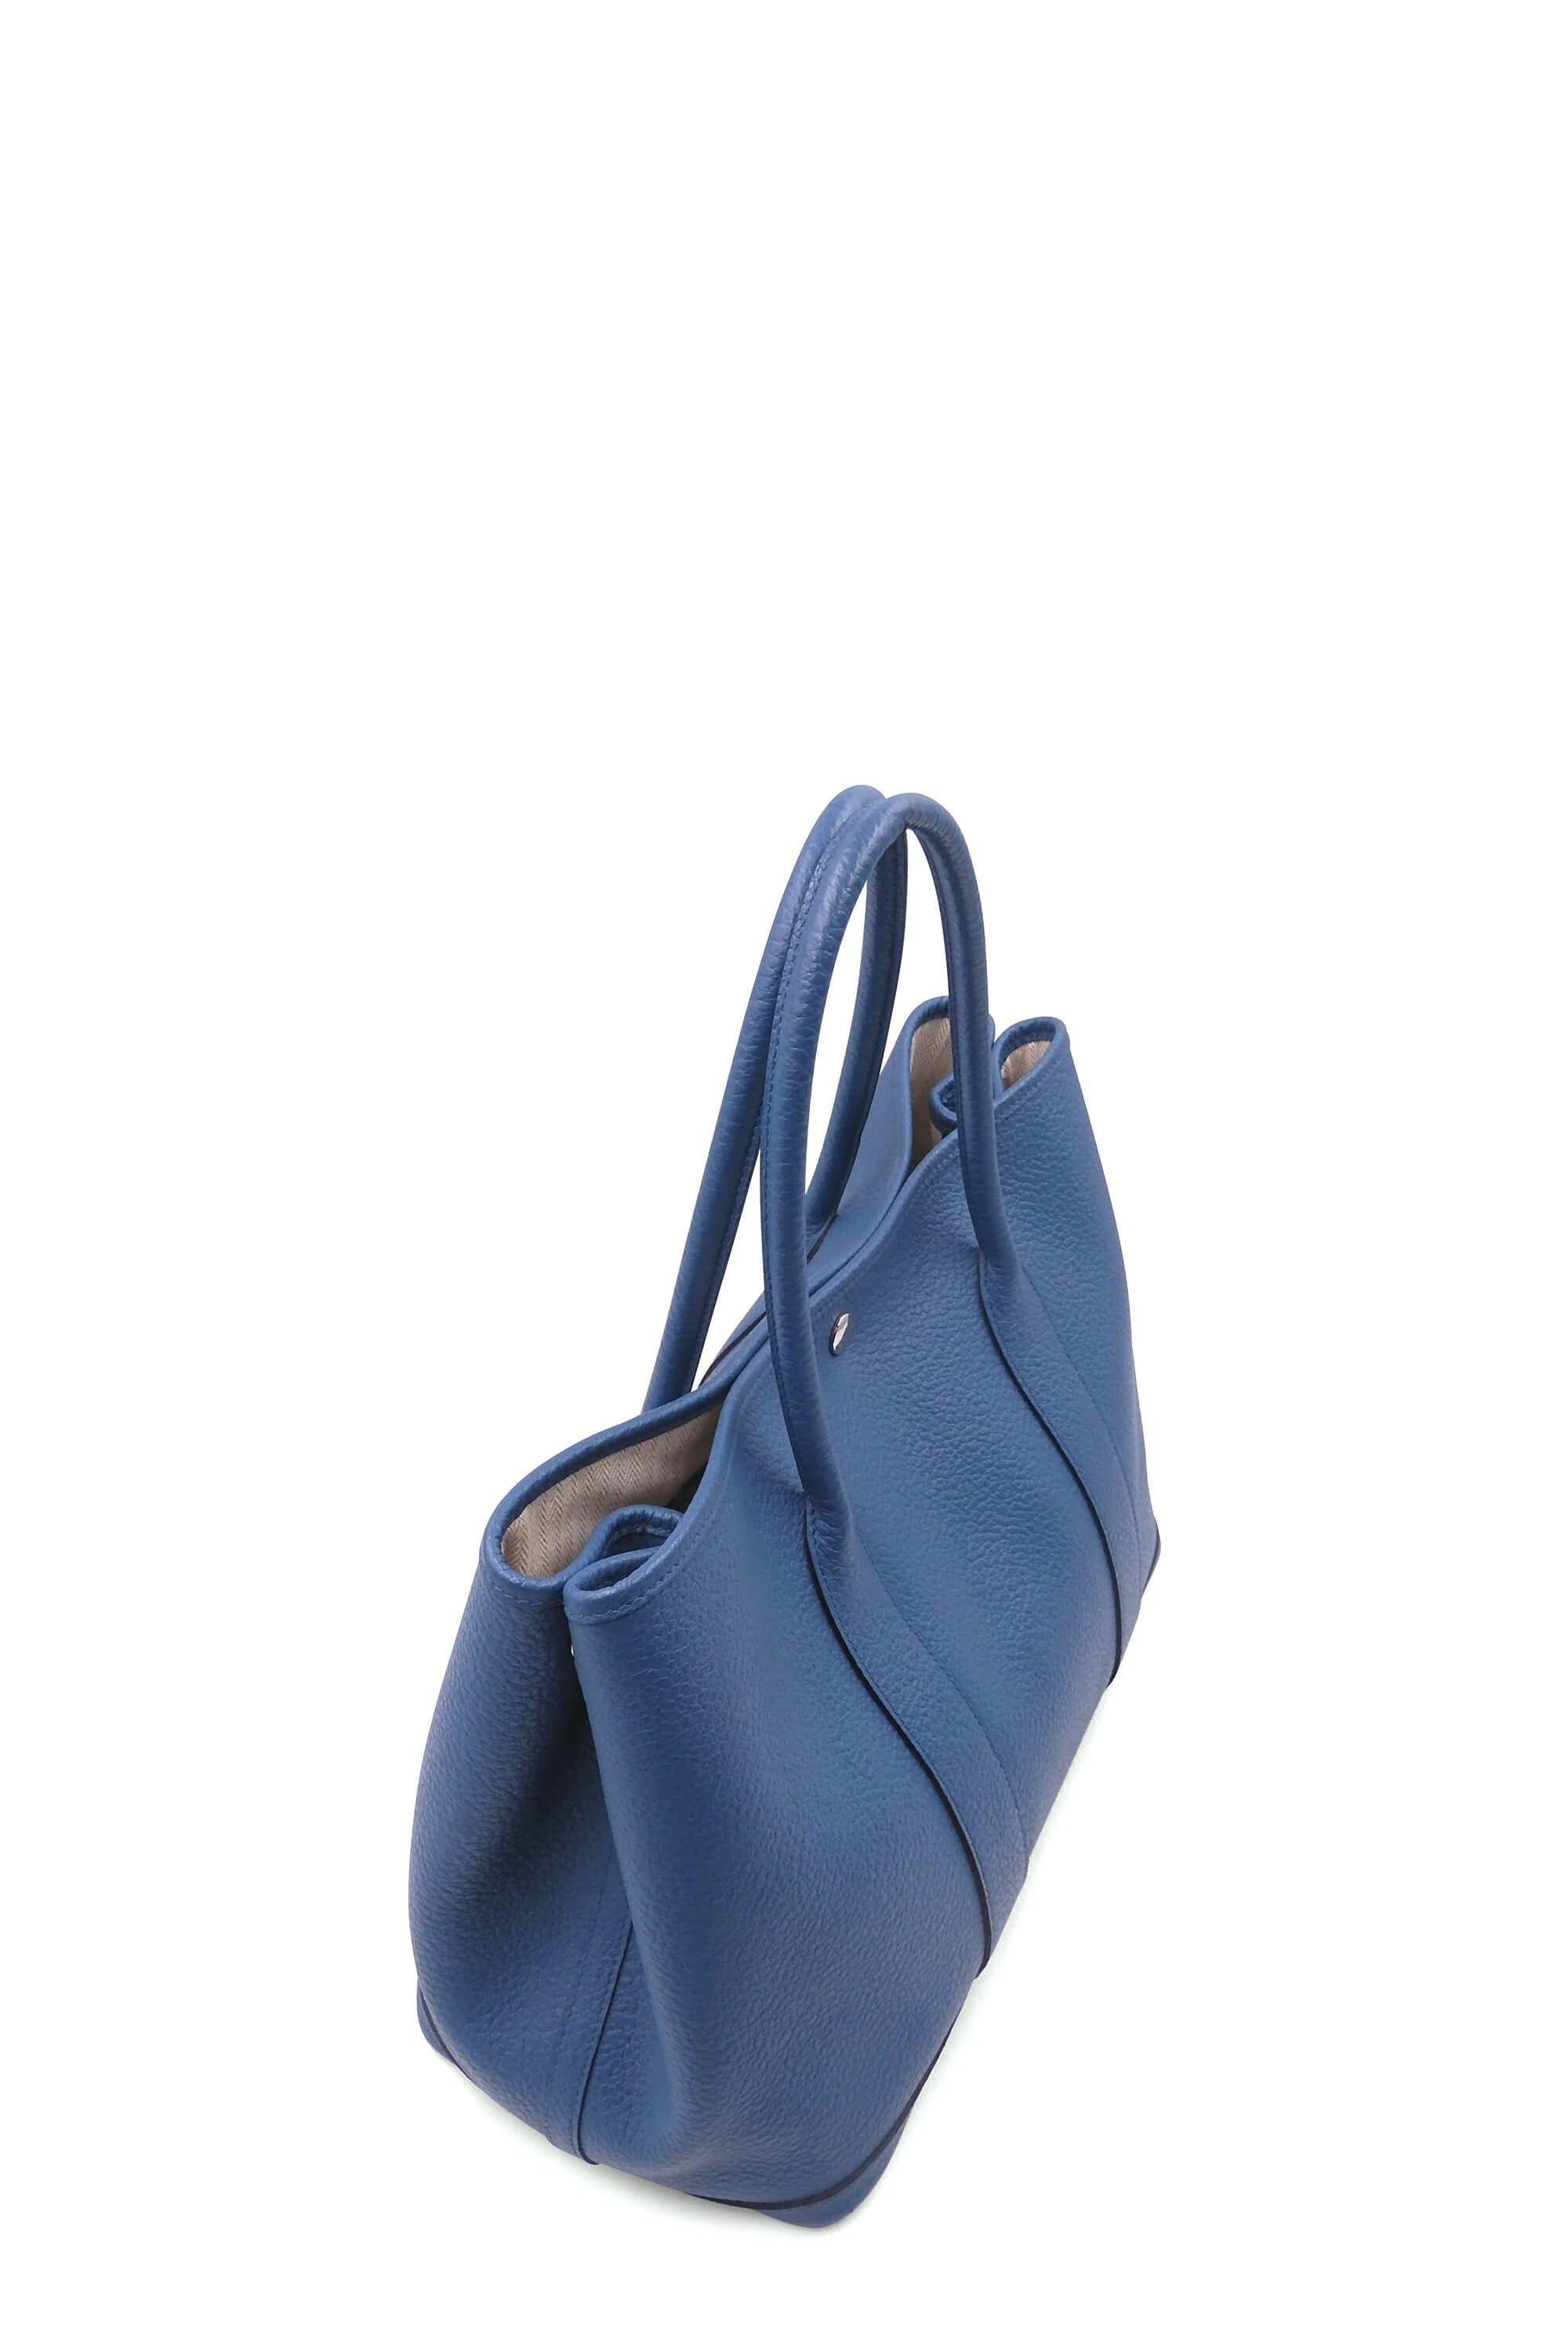 Hermès Pre-loved HERMES garden party TPM blue zanzibar Handbag